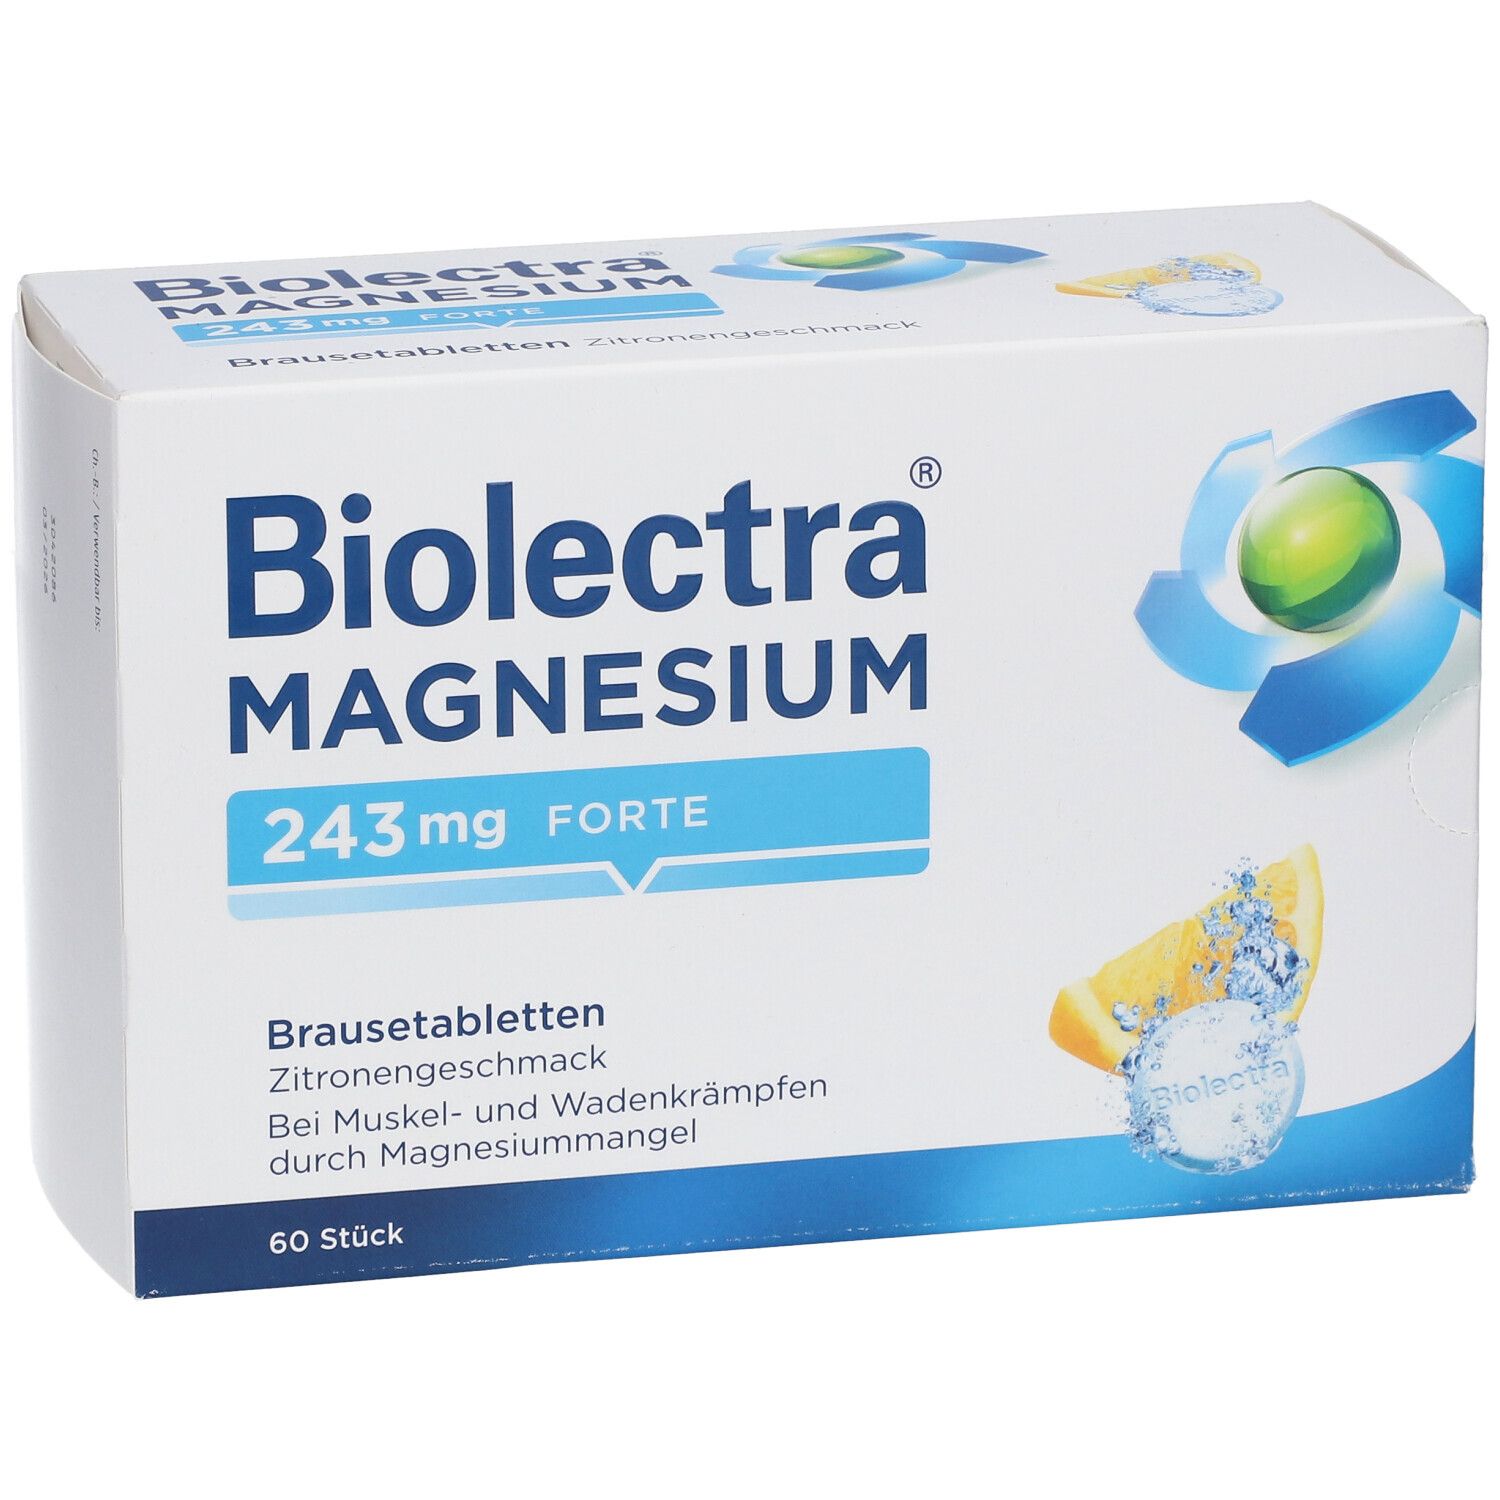 Biolectra® Magnesium 243 mg forte Brausetabletten Zitrone